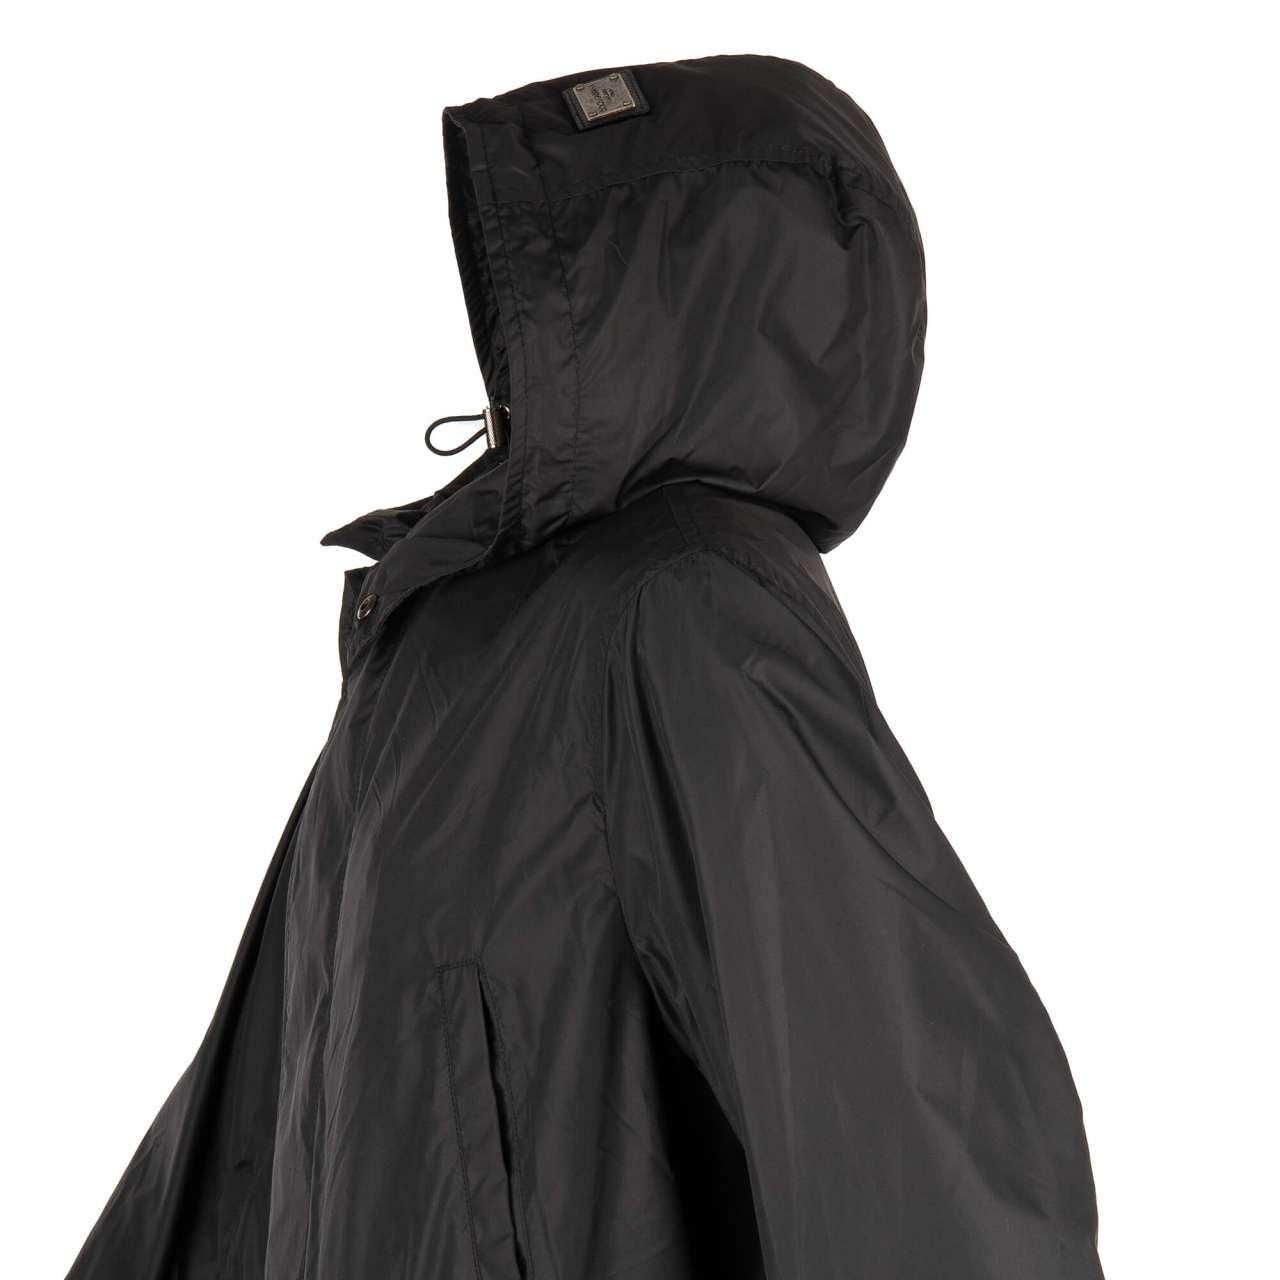 Dolce & Gabbana Light Hooded Rain Parka Jacket with Pockets and Logo Black 50 For Sale 1